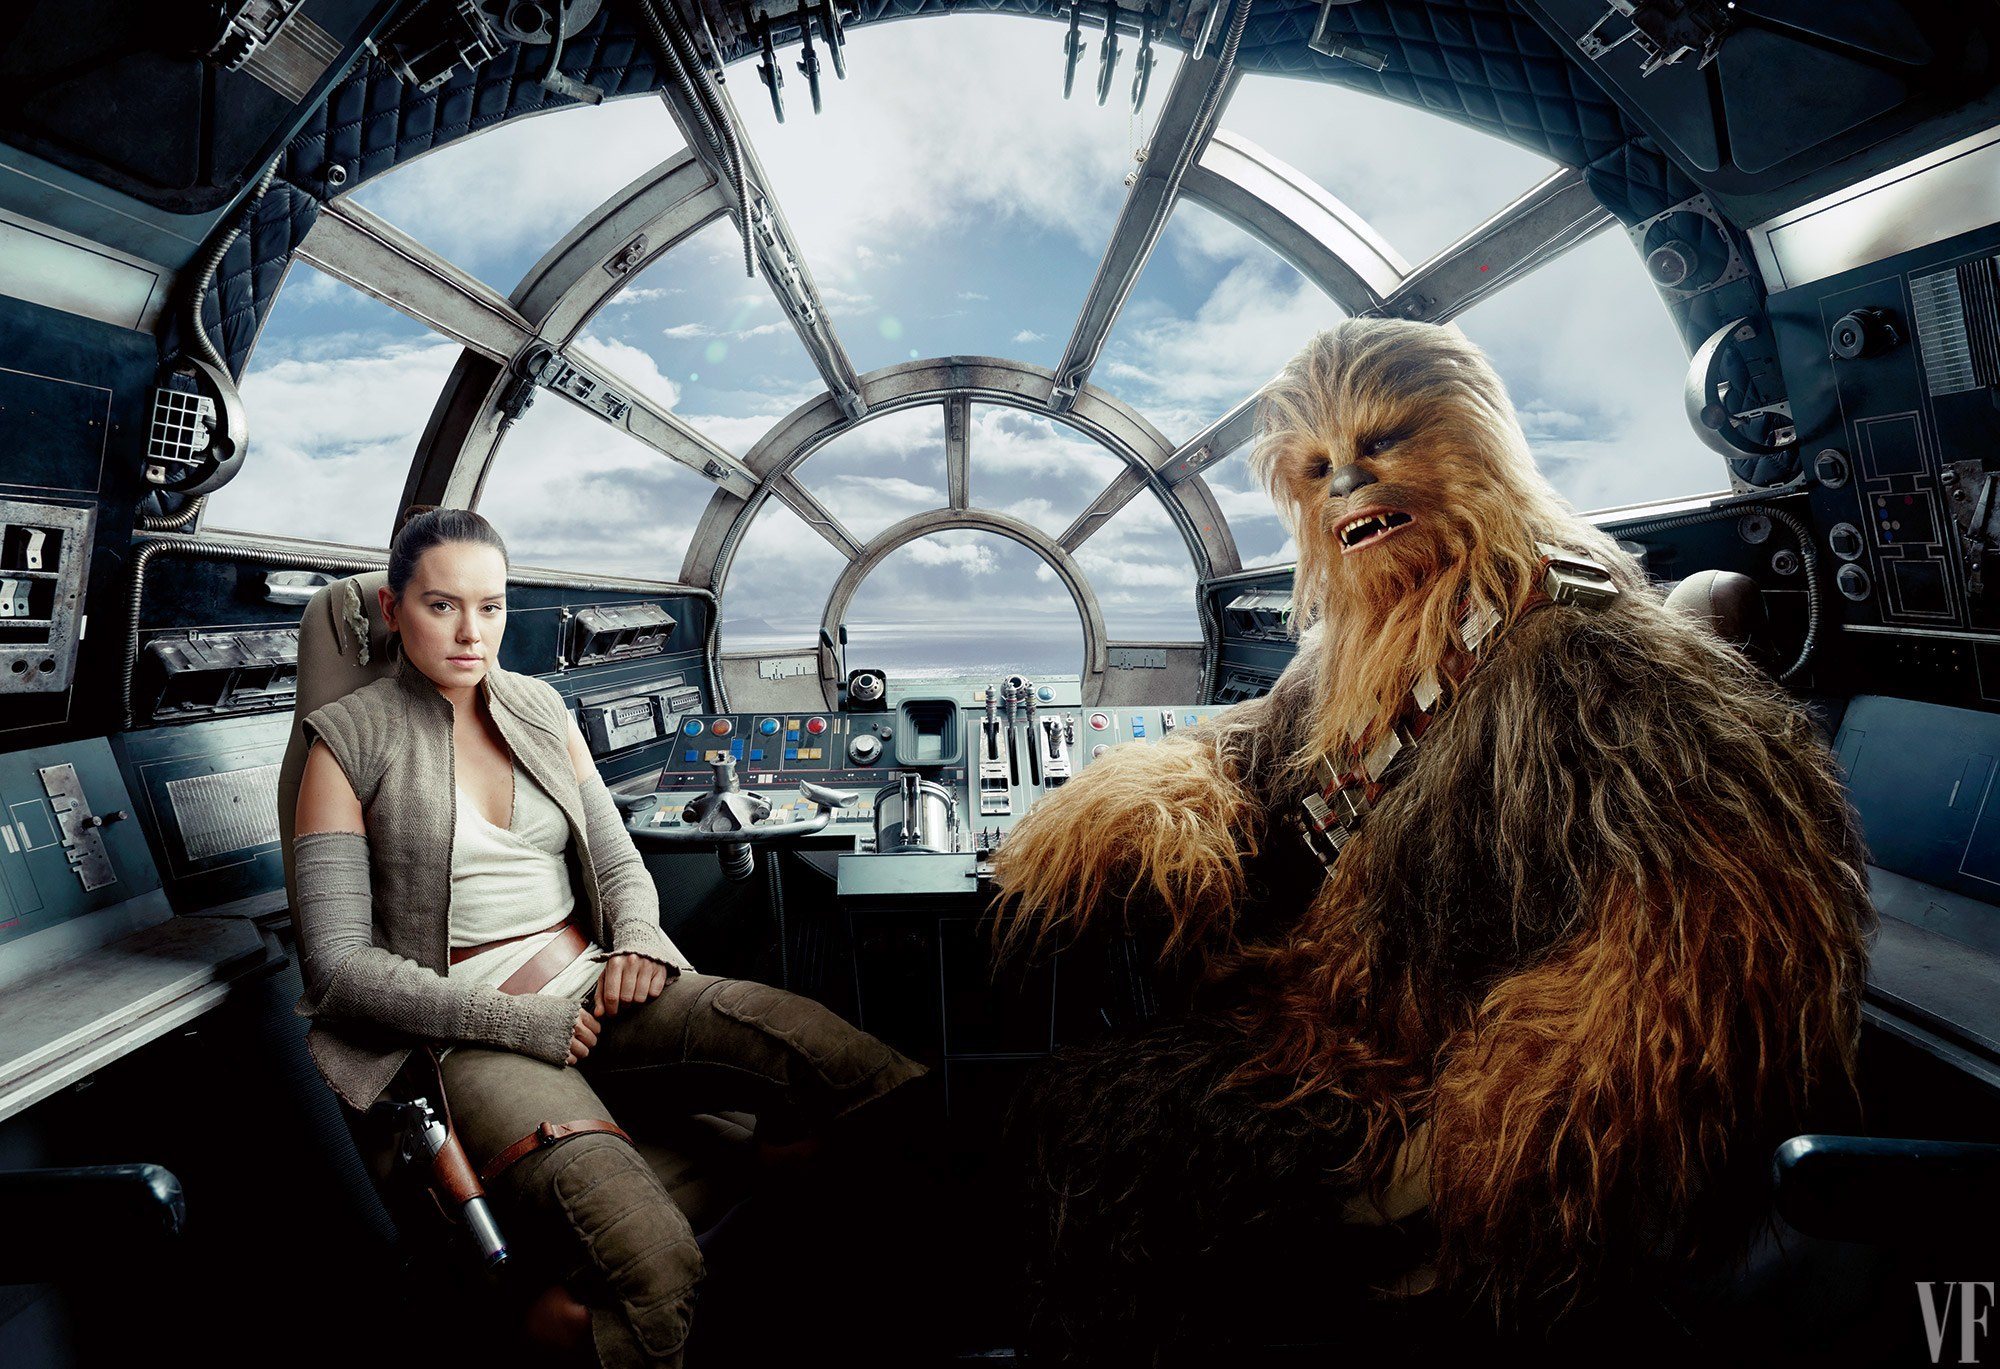 Vanity Fair’s Star Wars Photos Give Bigger Glimpse Into Star Wars: The Last Jedi